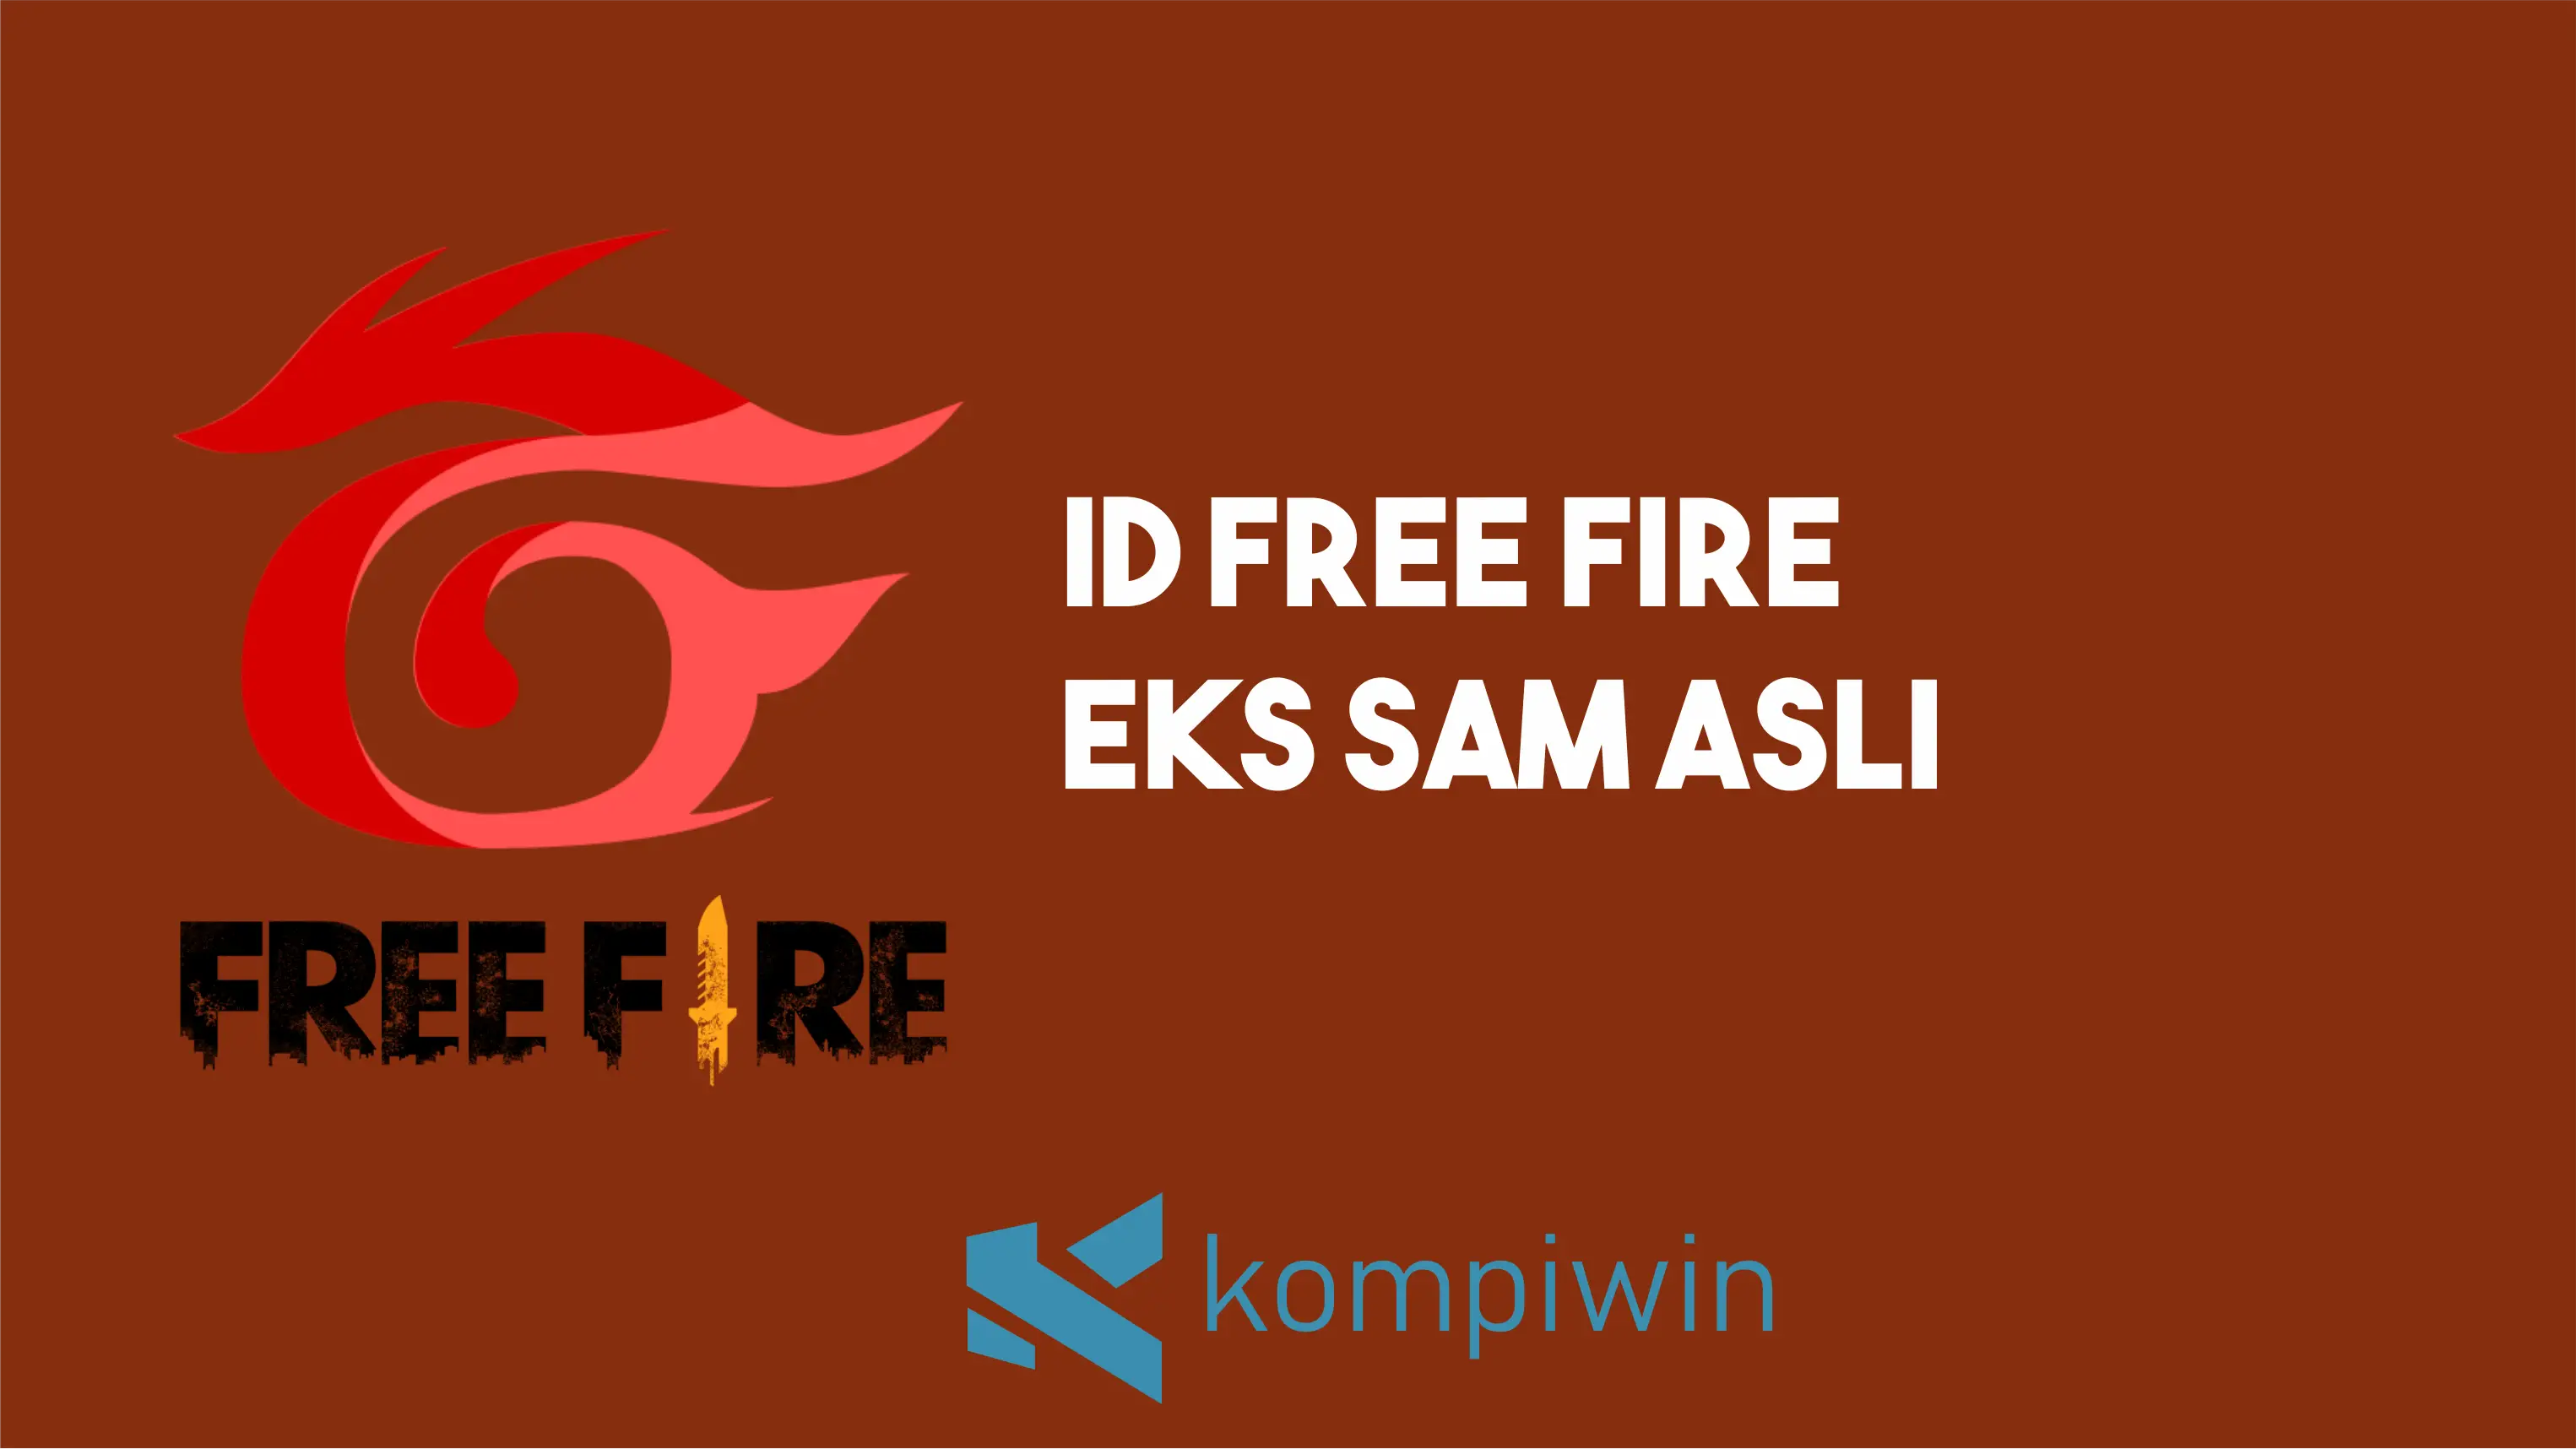 ID Free Fire Eks Sam